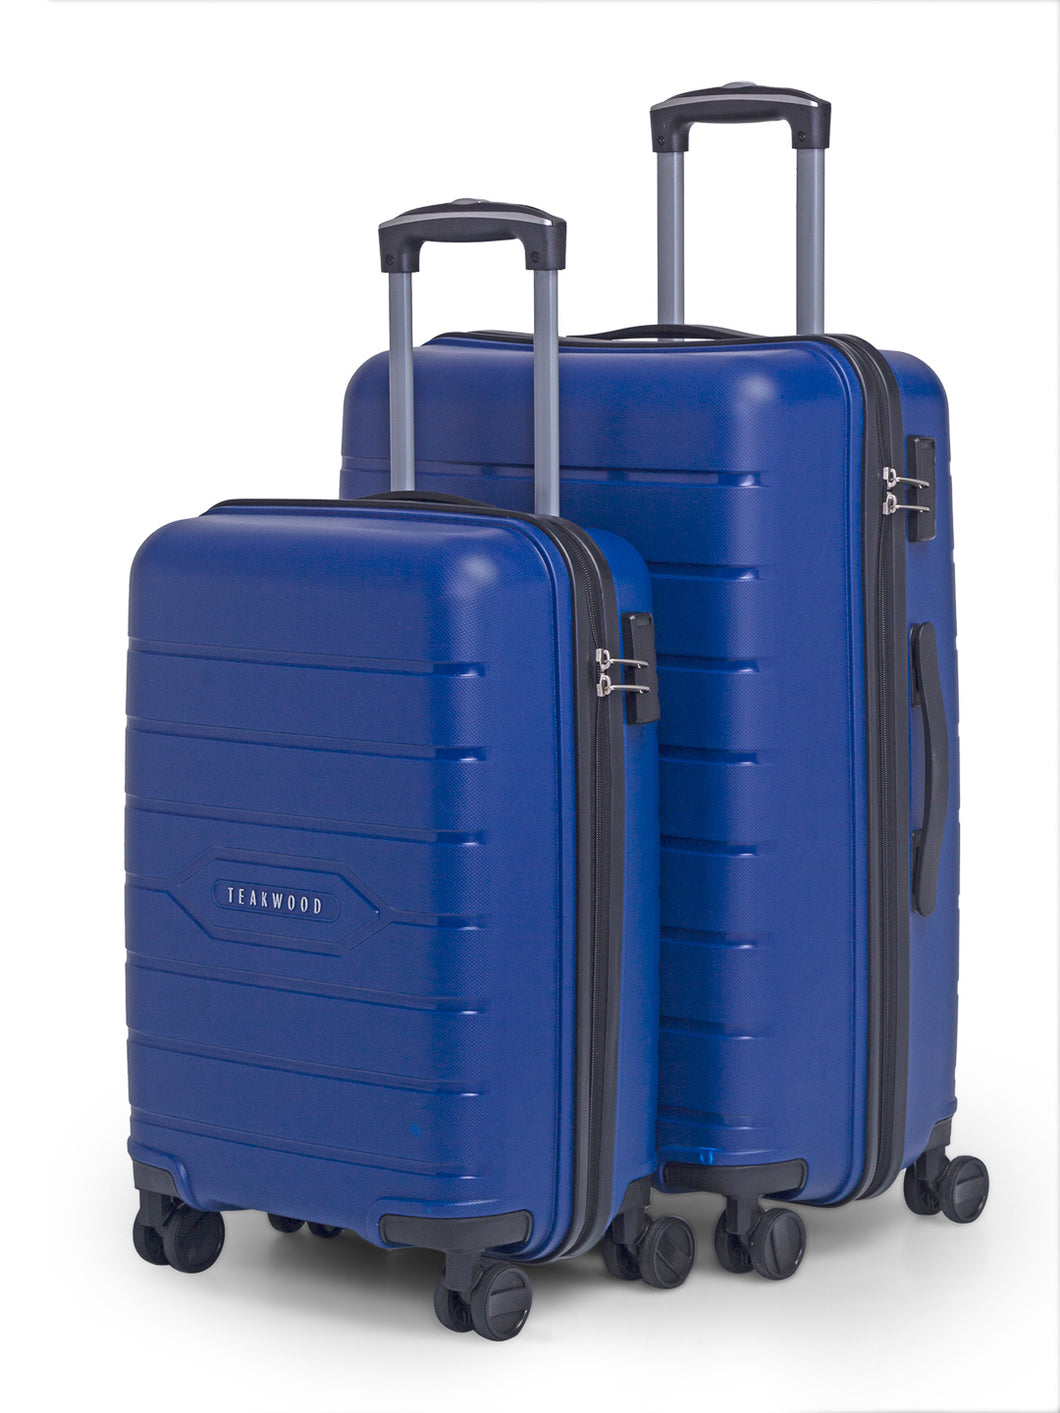 Teakwood Blue Trolley Bag Set of Two